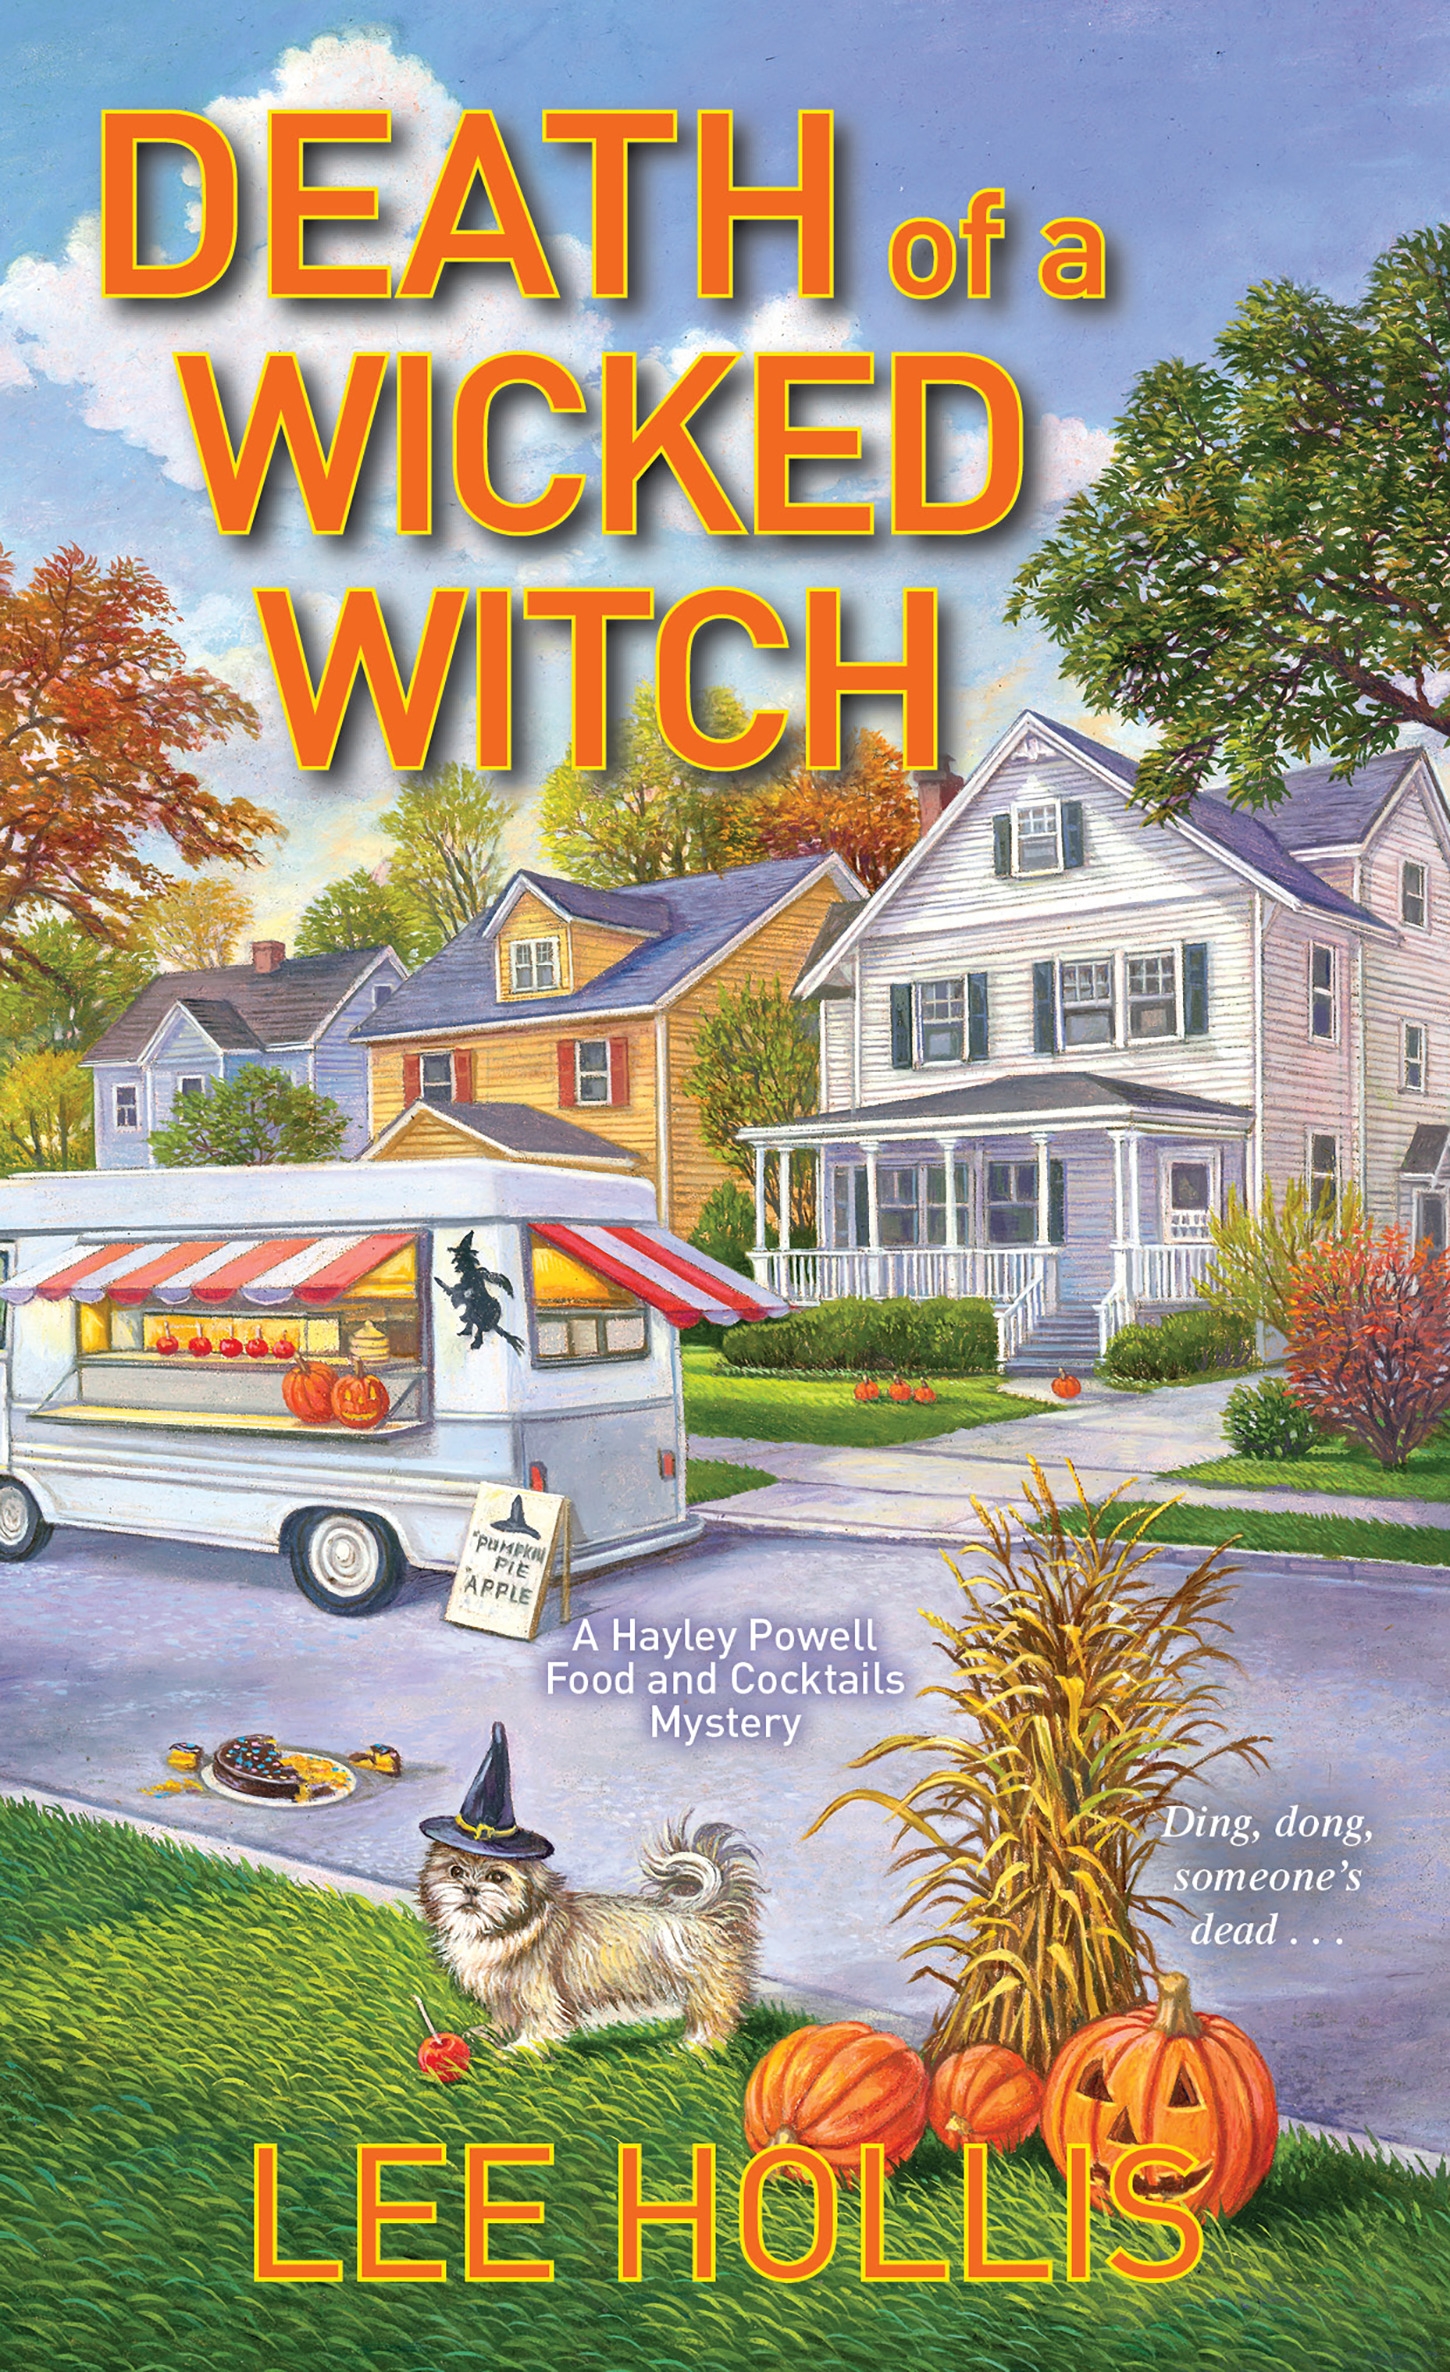 Wicked Witch Murder by Leslie Meier